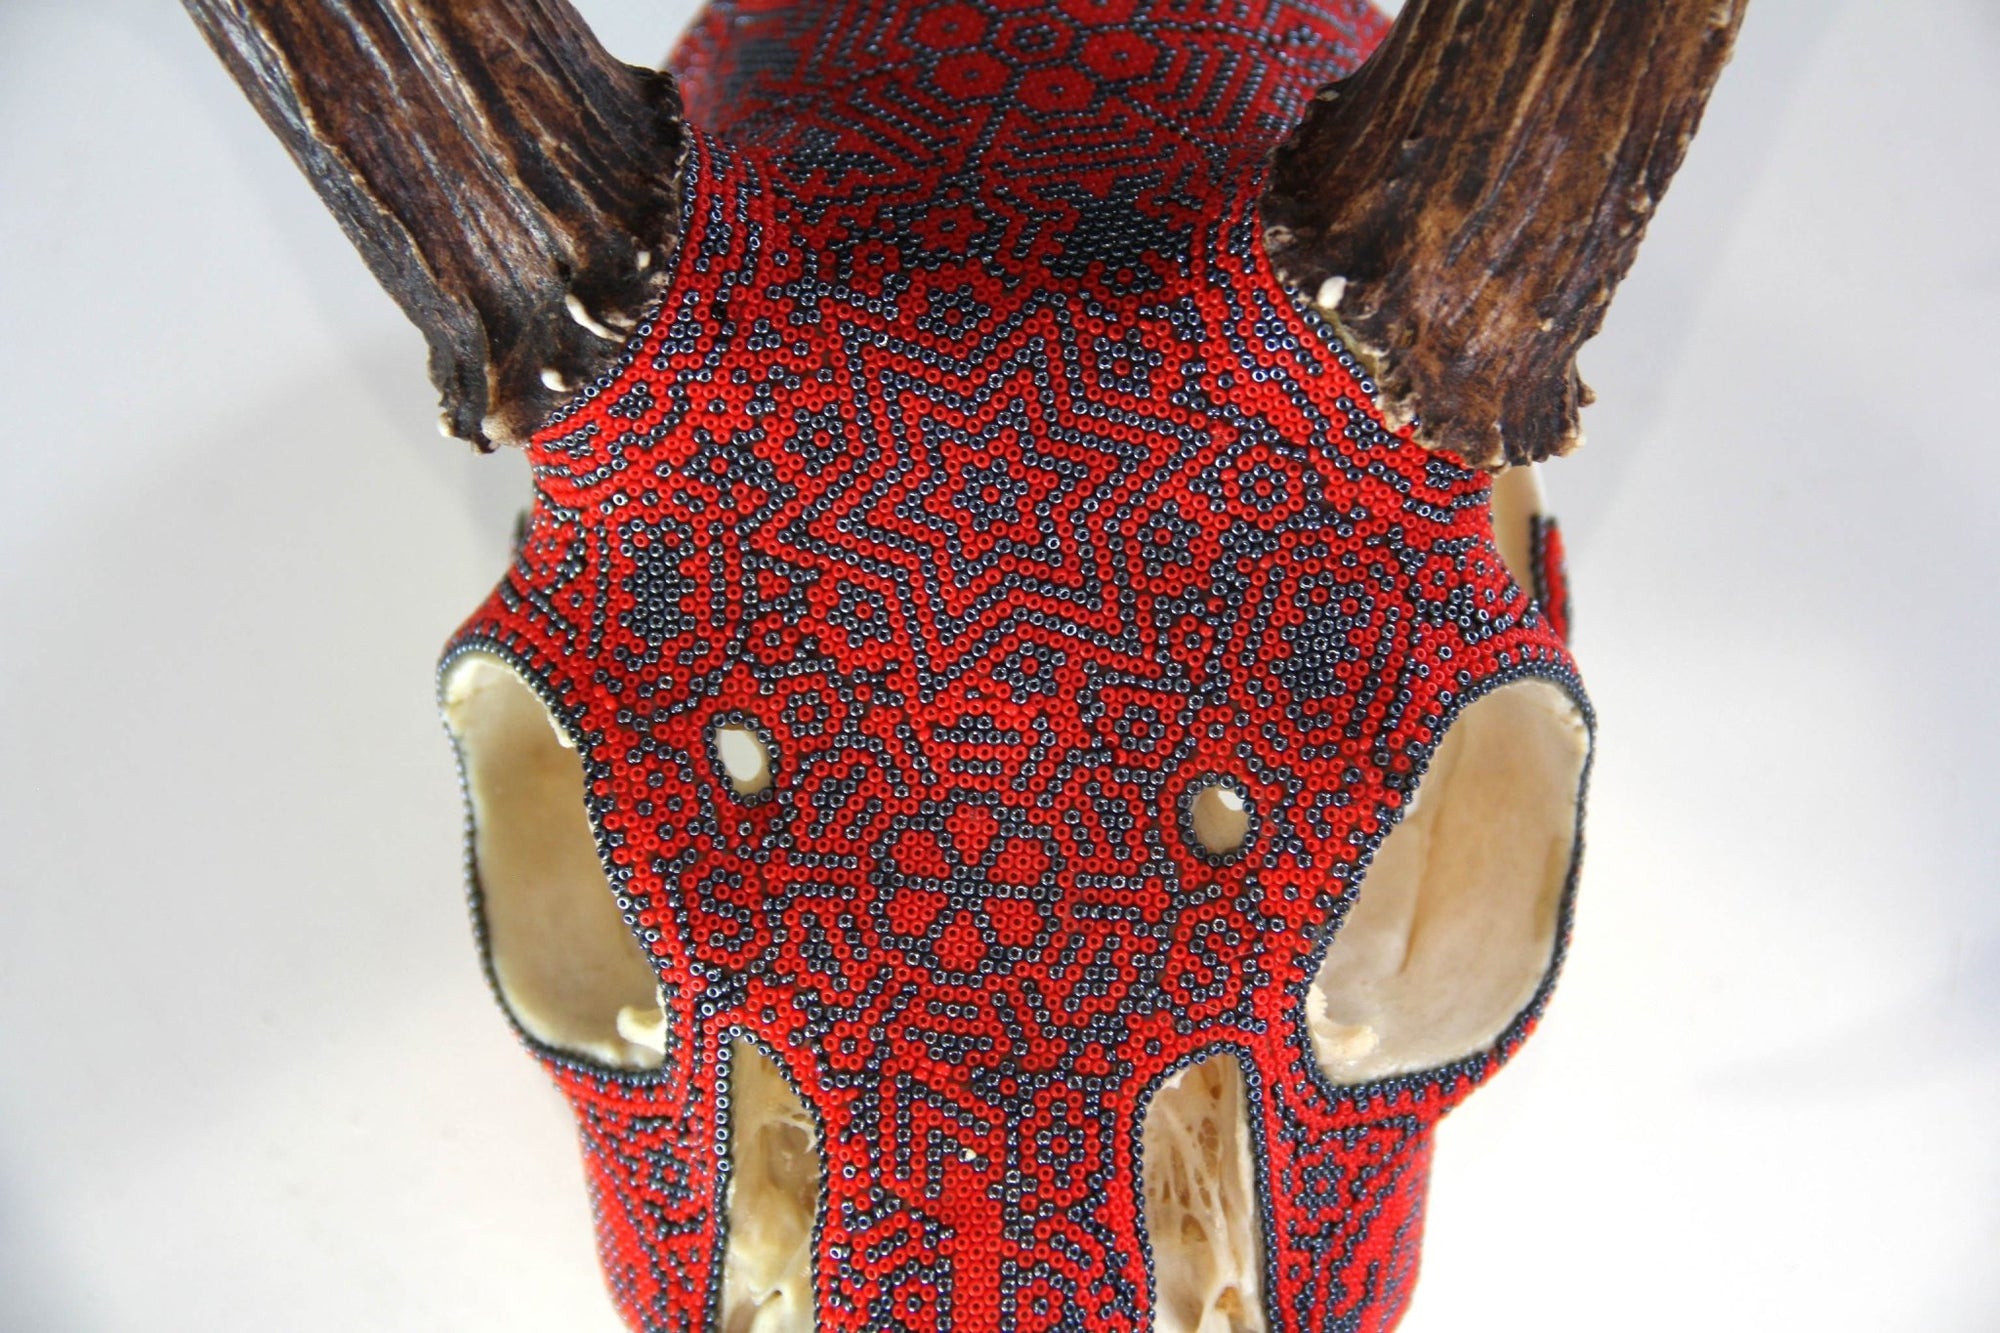 Crâne de cerf Huichol - Xawe Tatewari - Art Huichol - Marakame